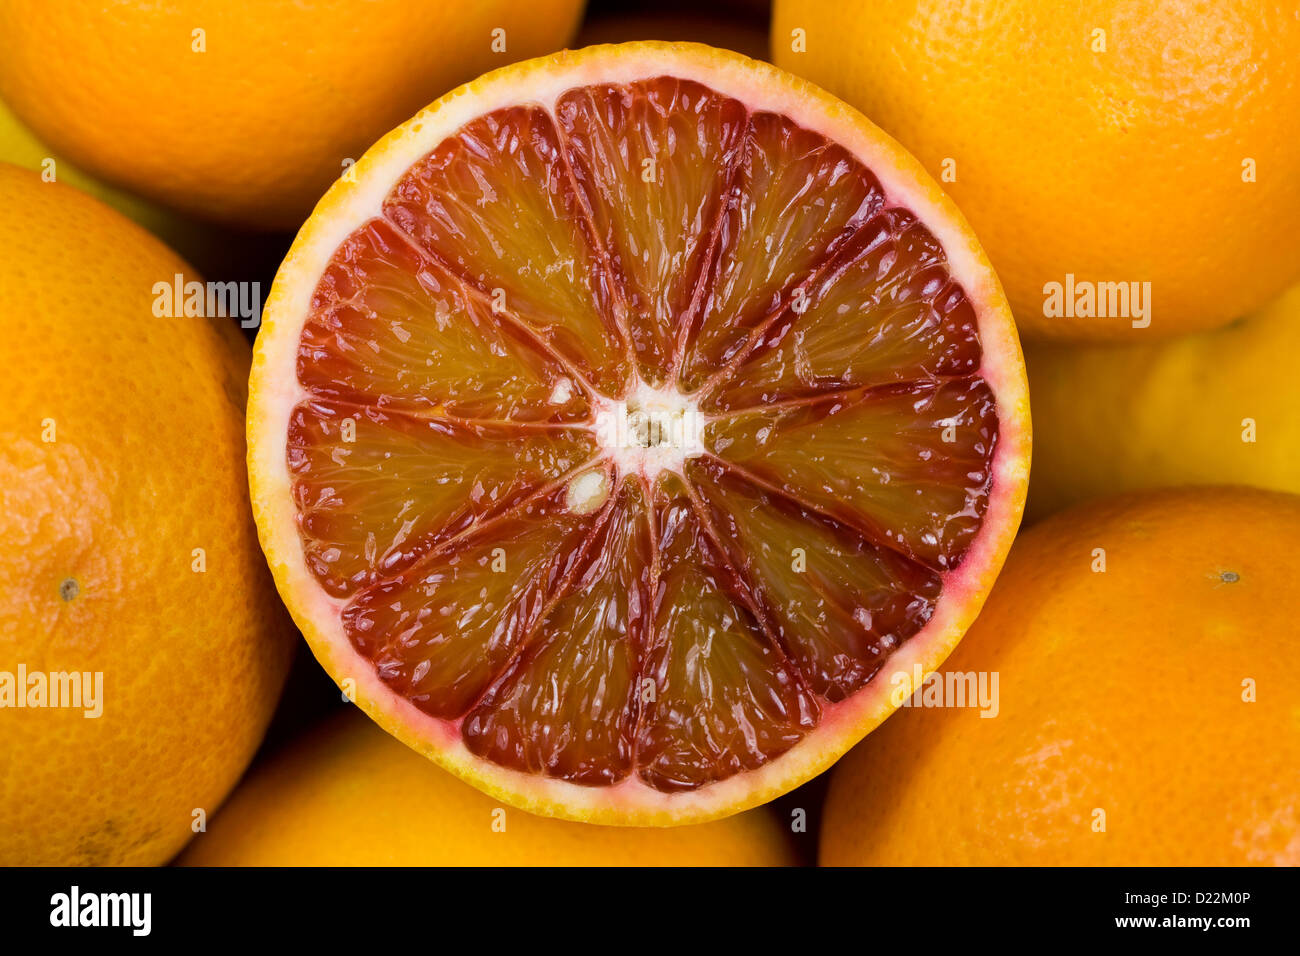 Citrus sinenesis x. Arance sanguigne in una coppa di frutta. Foto Stock